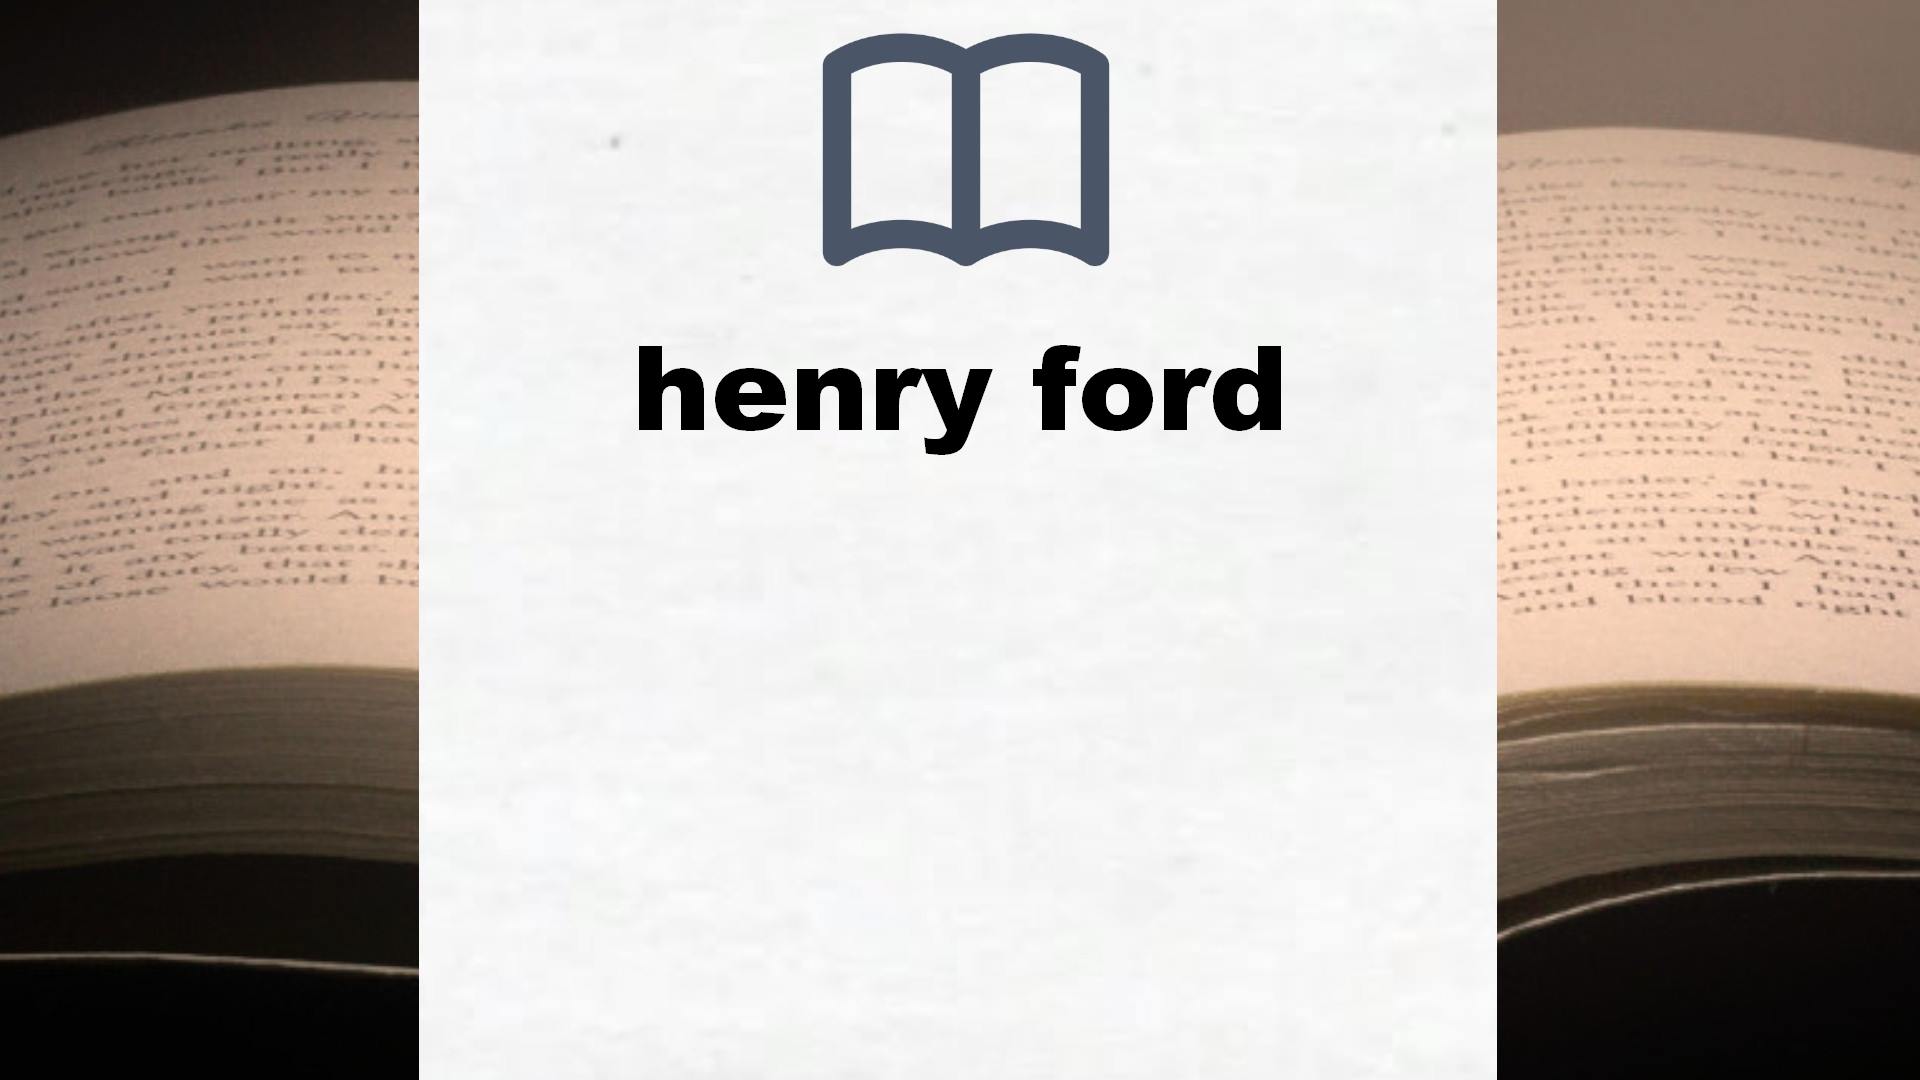 Libros sobre henry ford